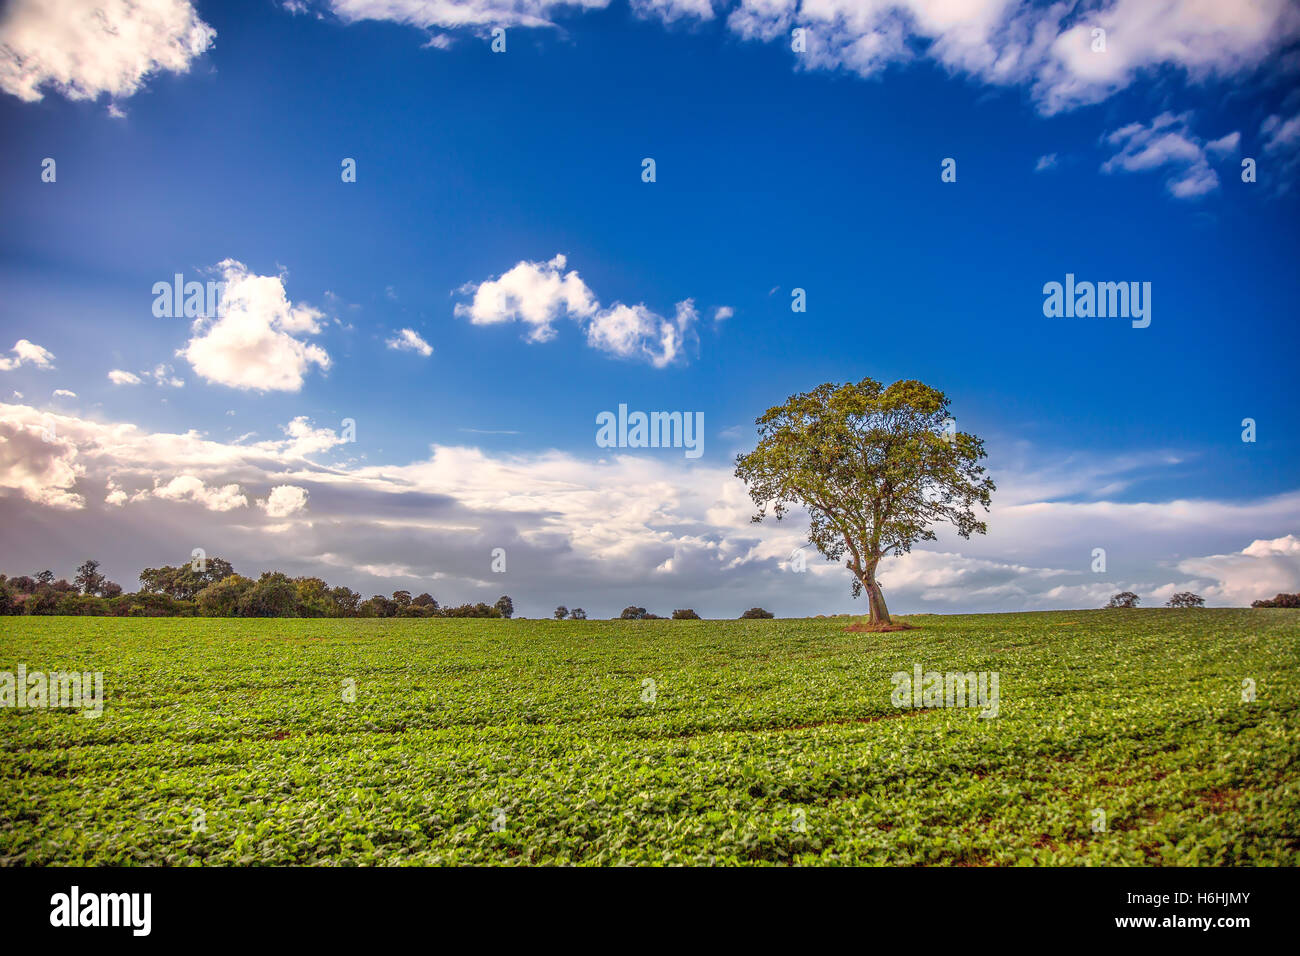 A tree on a farm under  bautiful blue sky Stock Photo